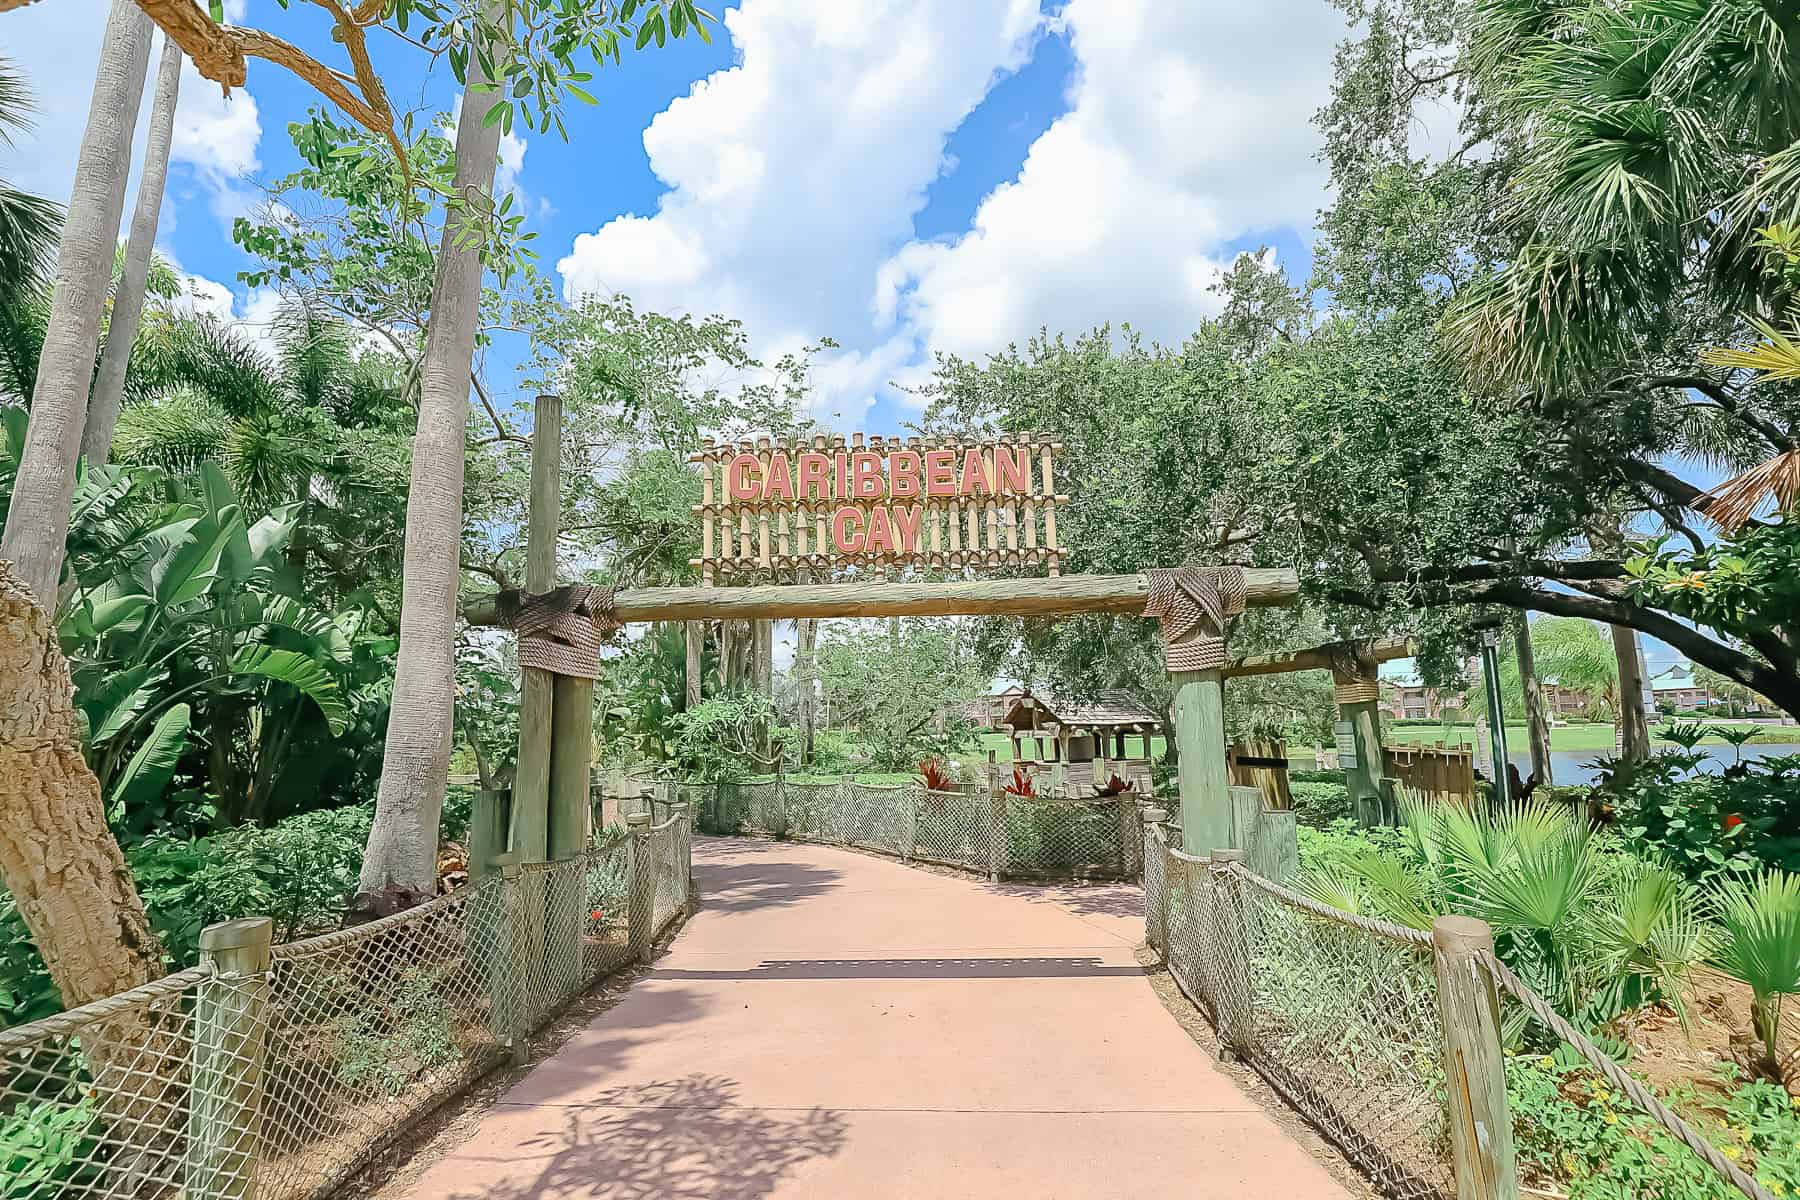 Entrance to Caribbean Cay Island at Disney's Caribbean Beach Resort